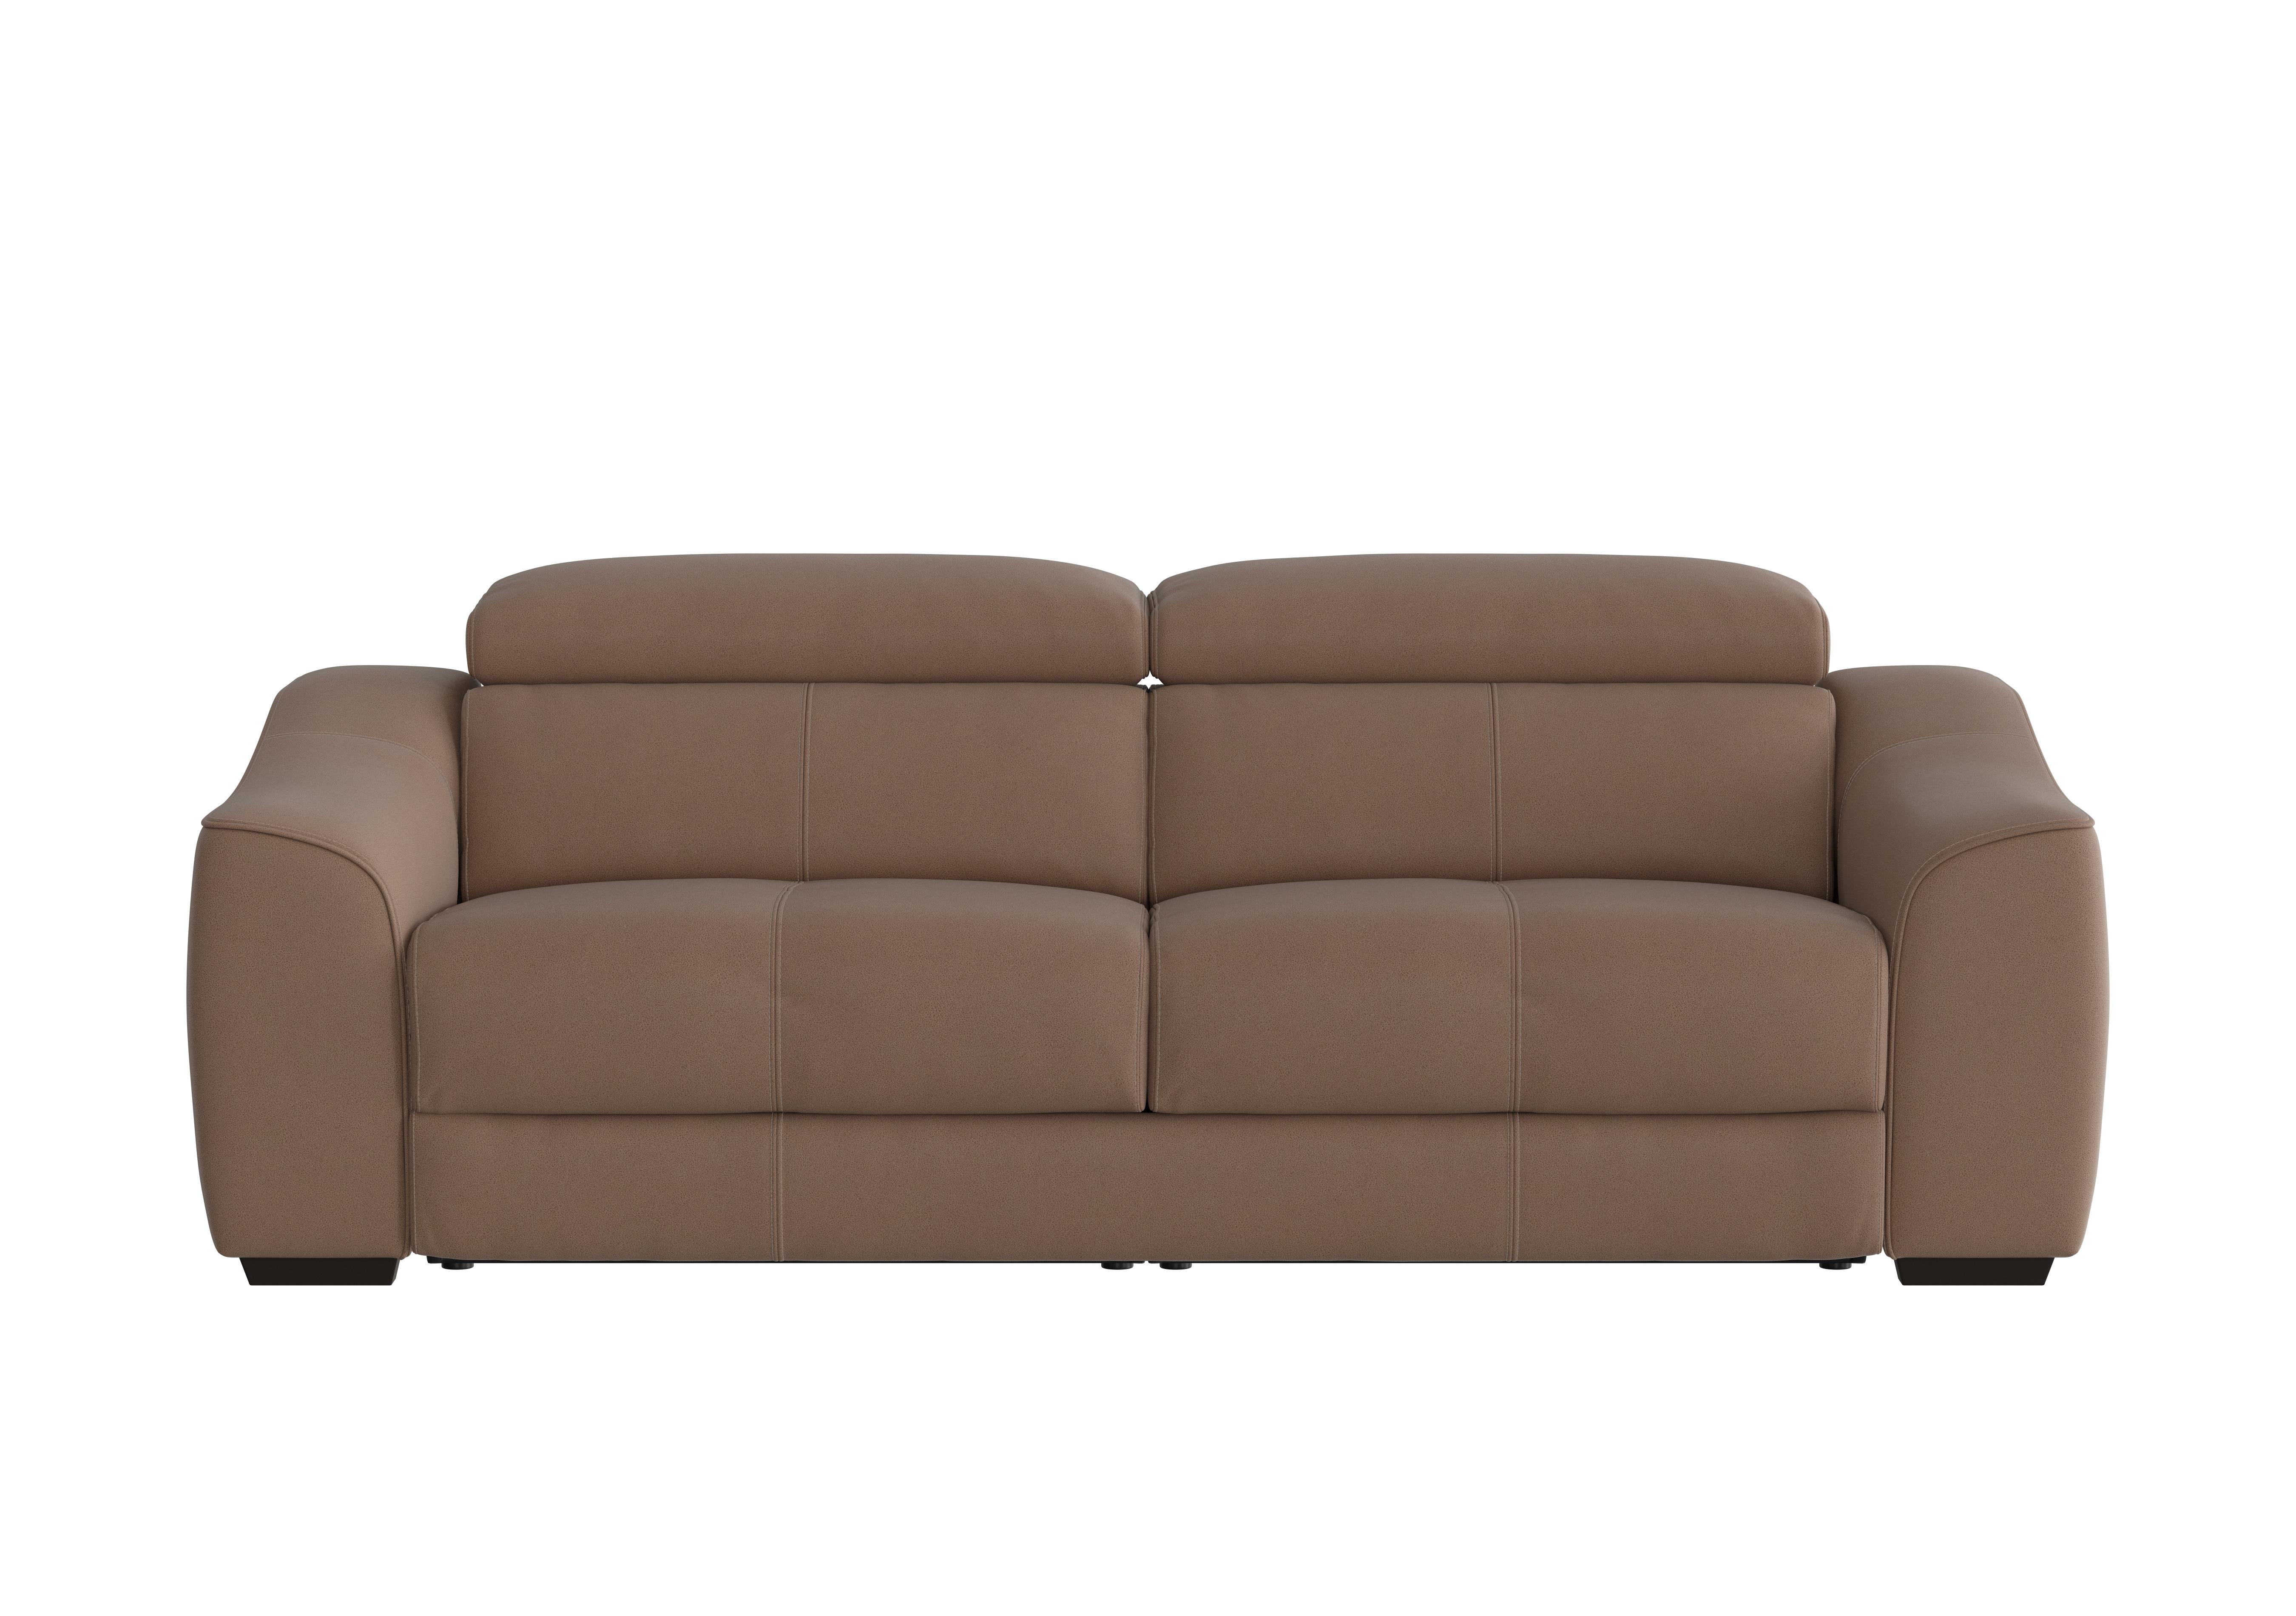 Elixir 3 Seater Fabric Sofa Bed in Bfa-Blj-R04  Tobacco on Furniture Village